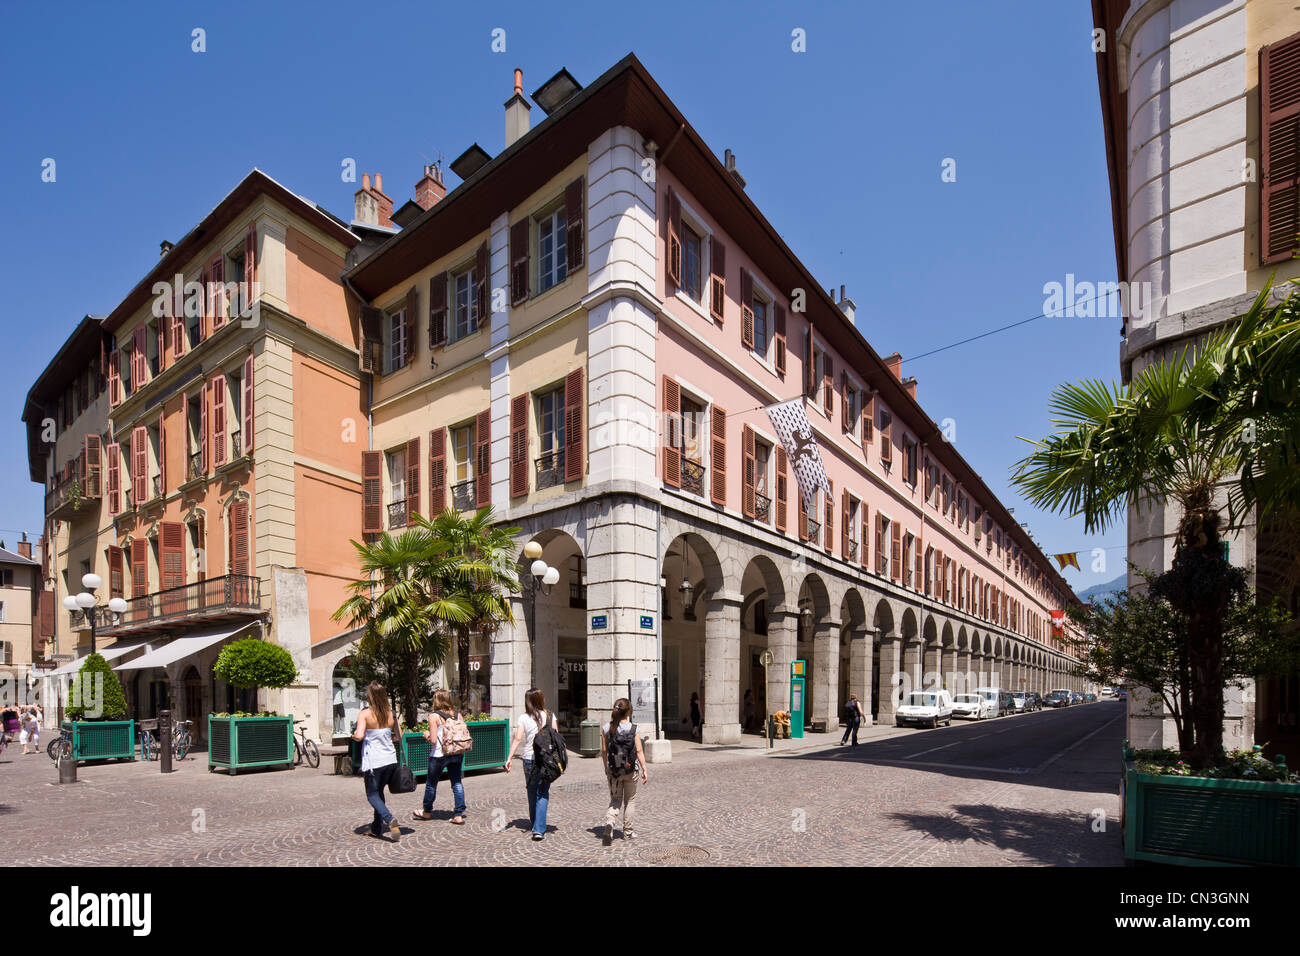 Die Altstadt, Avenue de Boigne, Chambery, Savoie, Frankreich Stockfoto